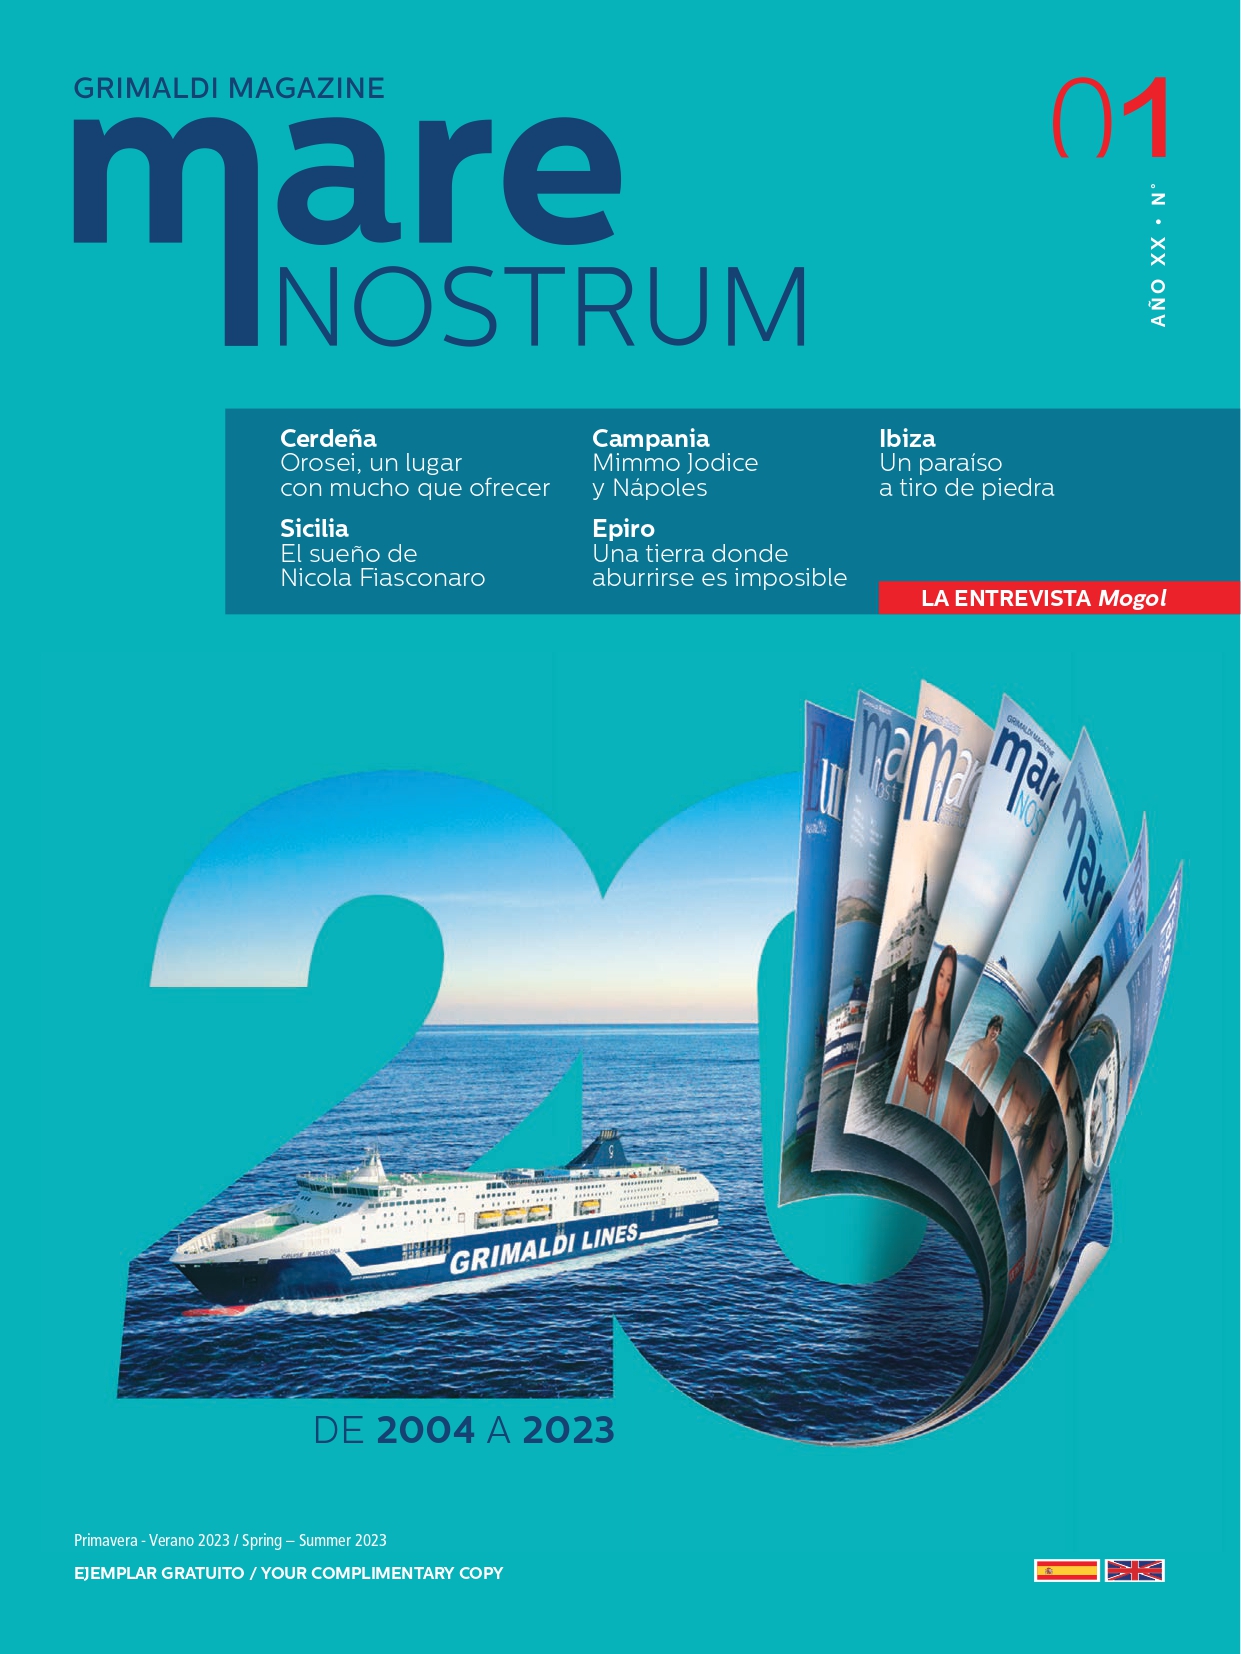 Grimaldi Magazine Mare Nostrum (Anno XX n. 1) Spagnolo-Inglese